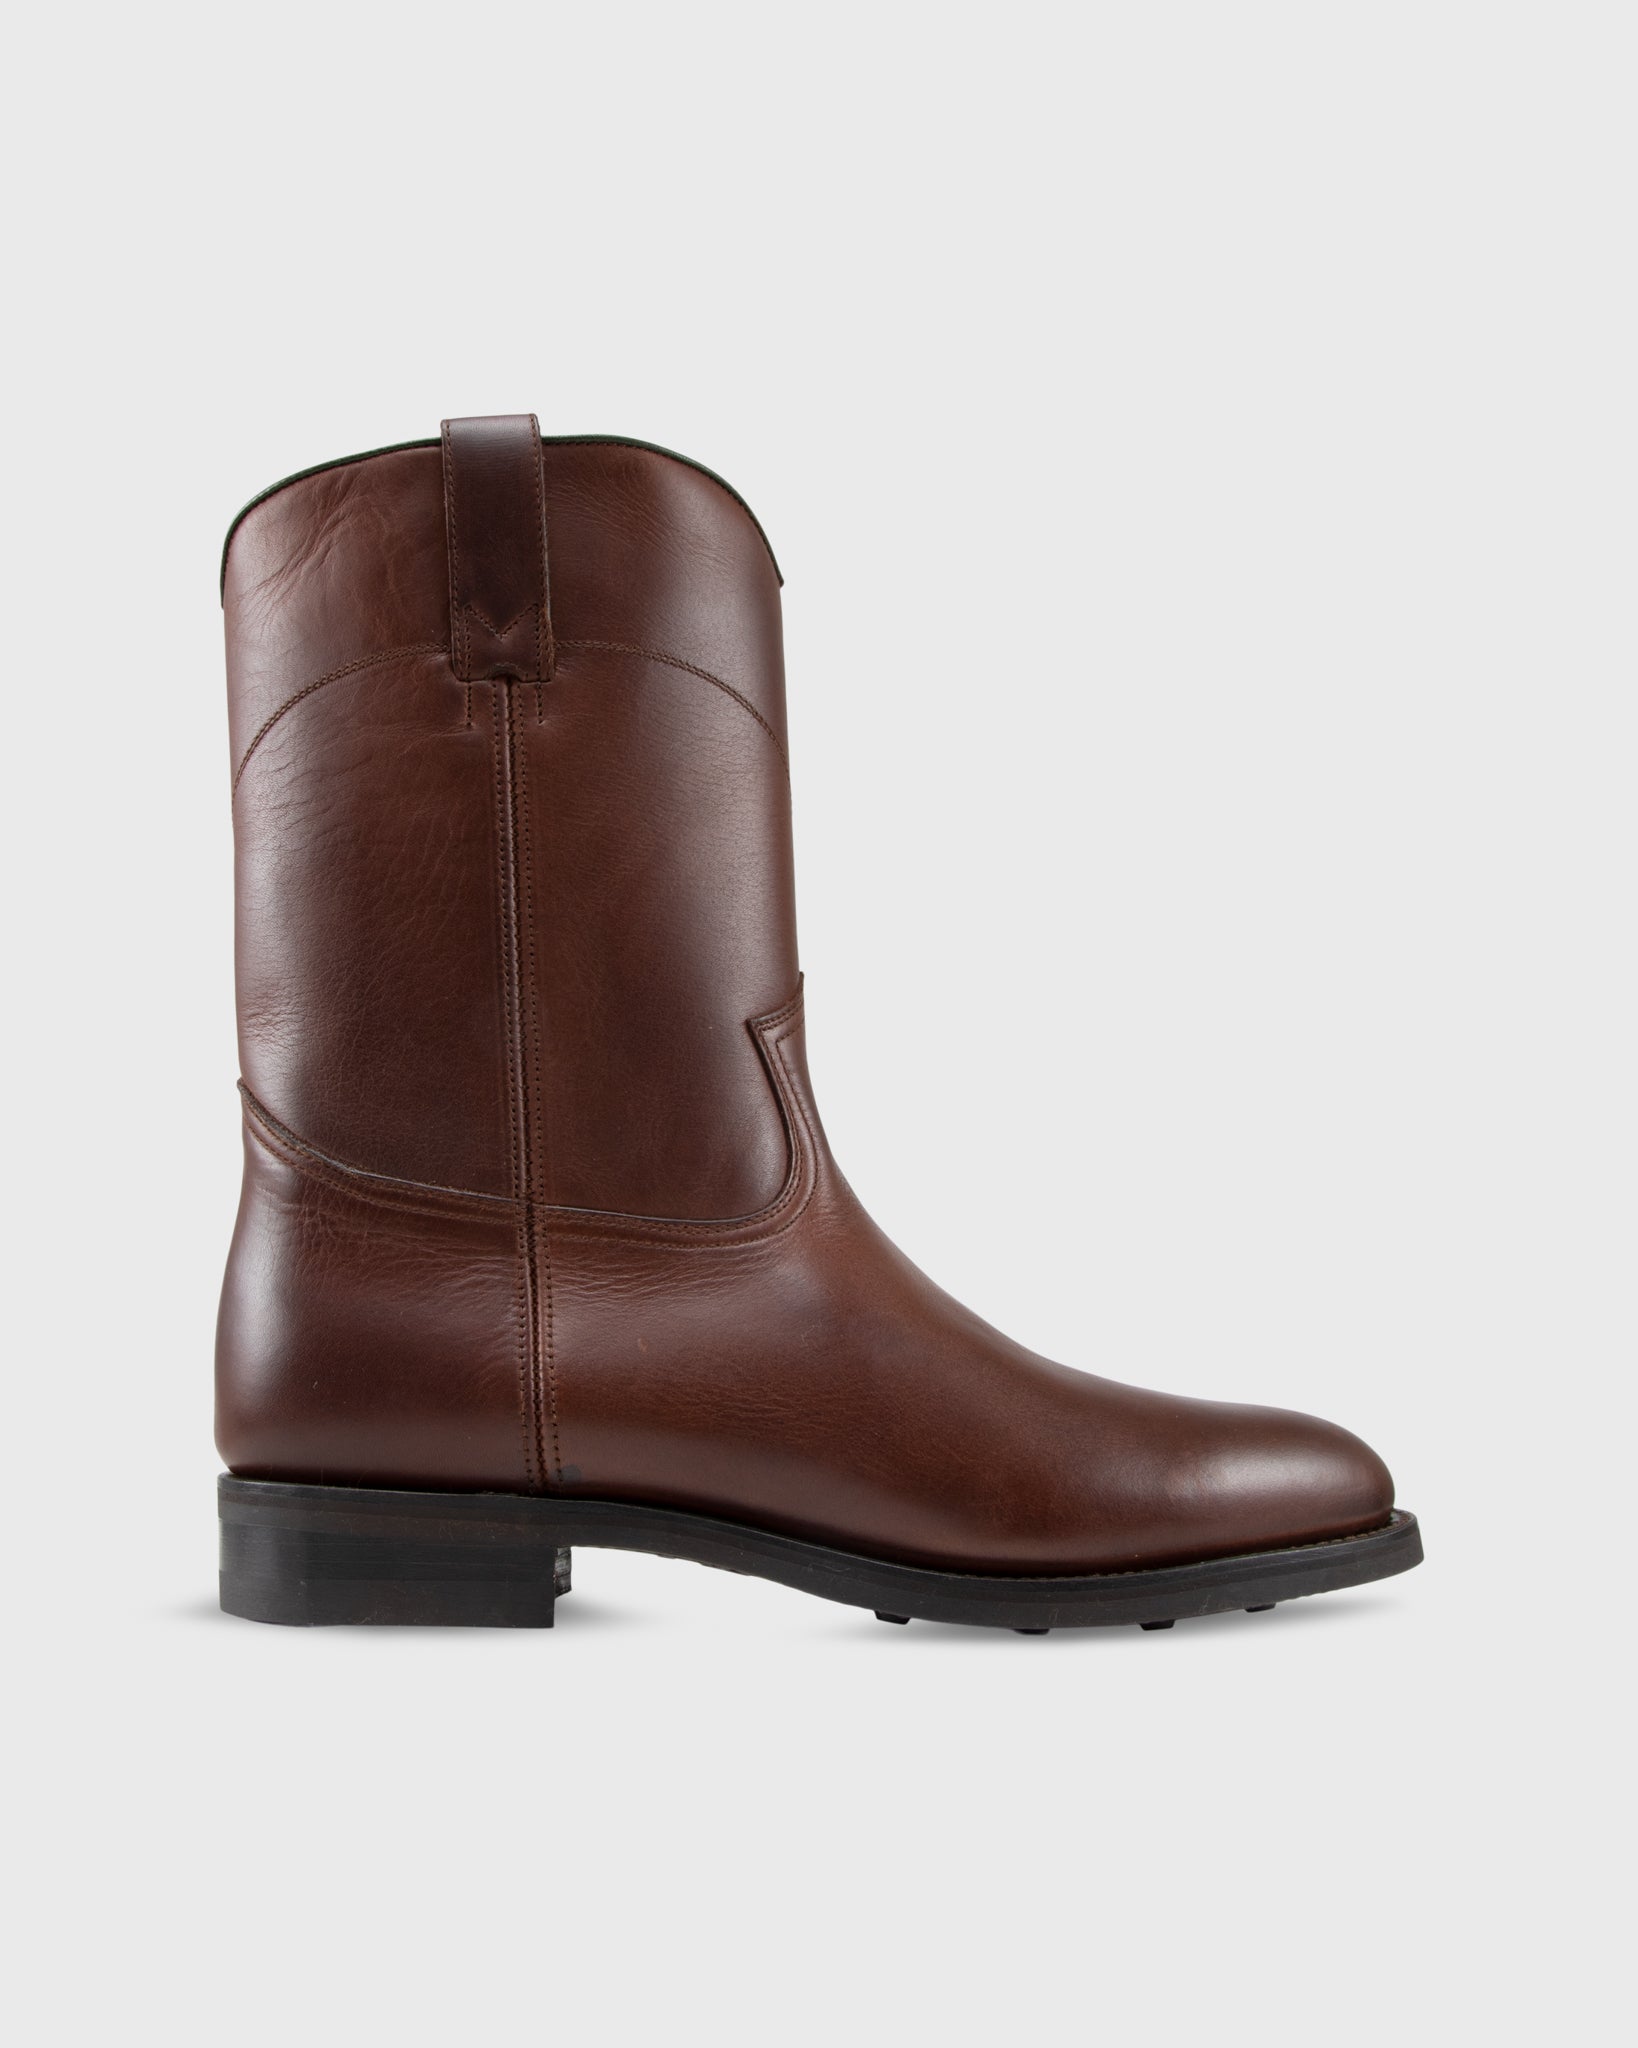 Vaquero Roper Boot in Dark Brown Leather